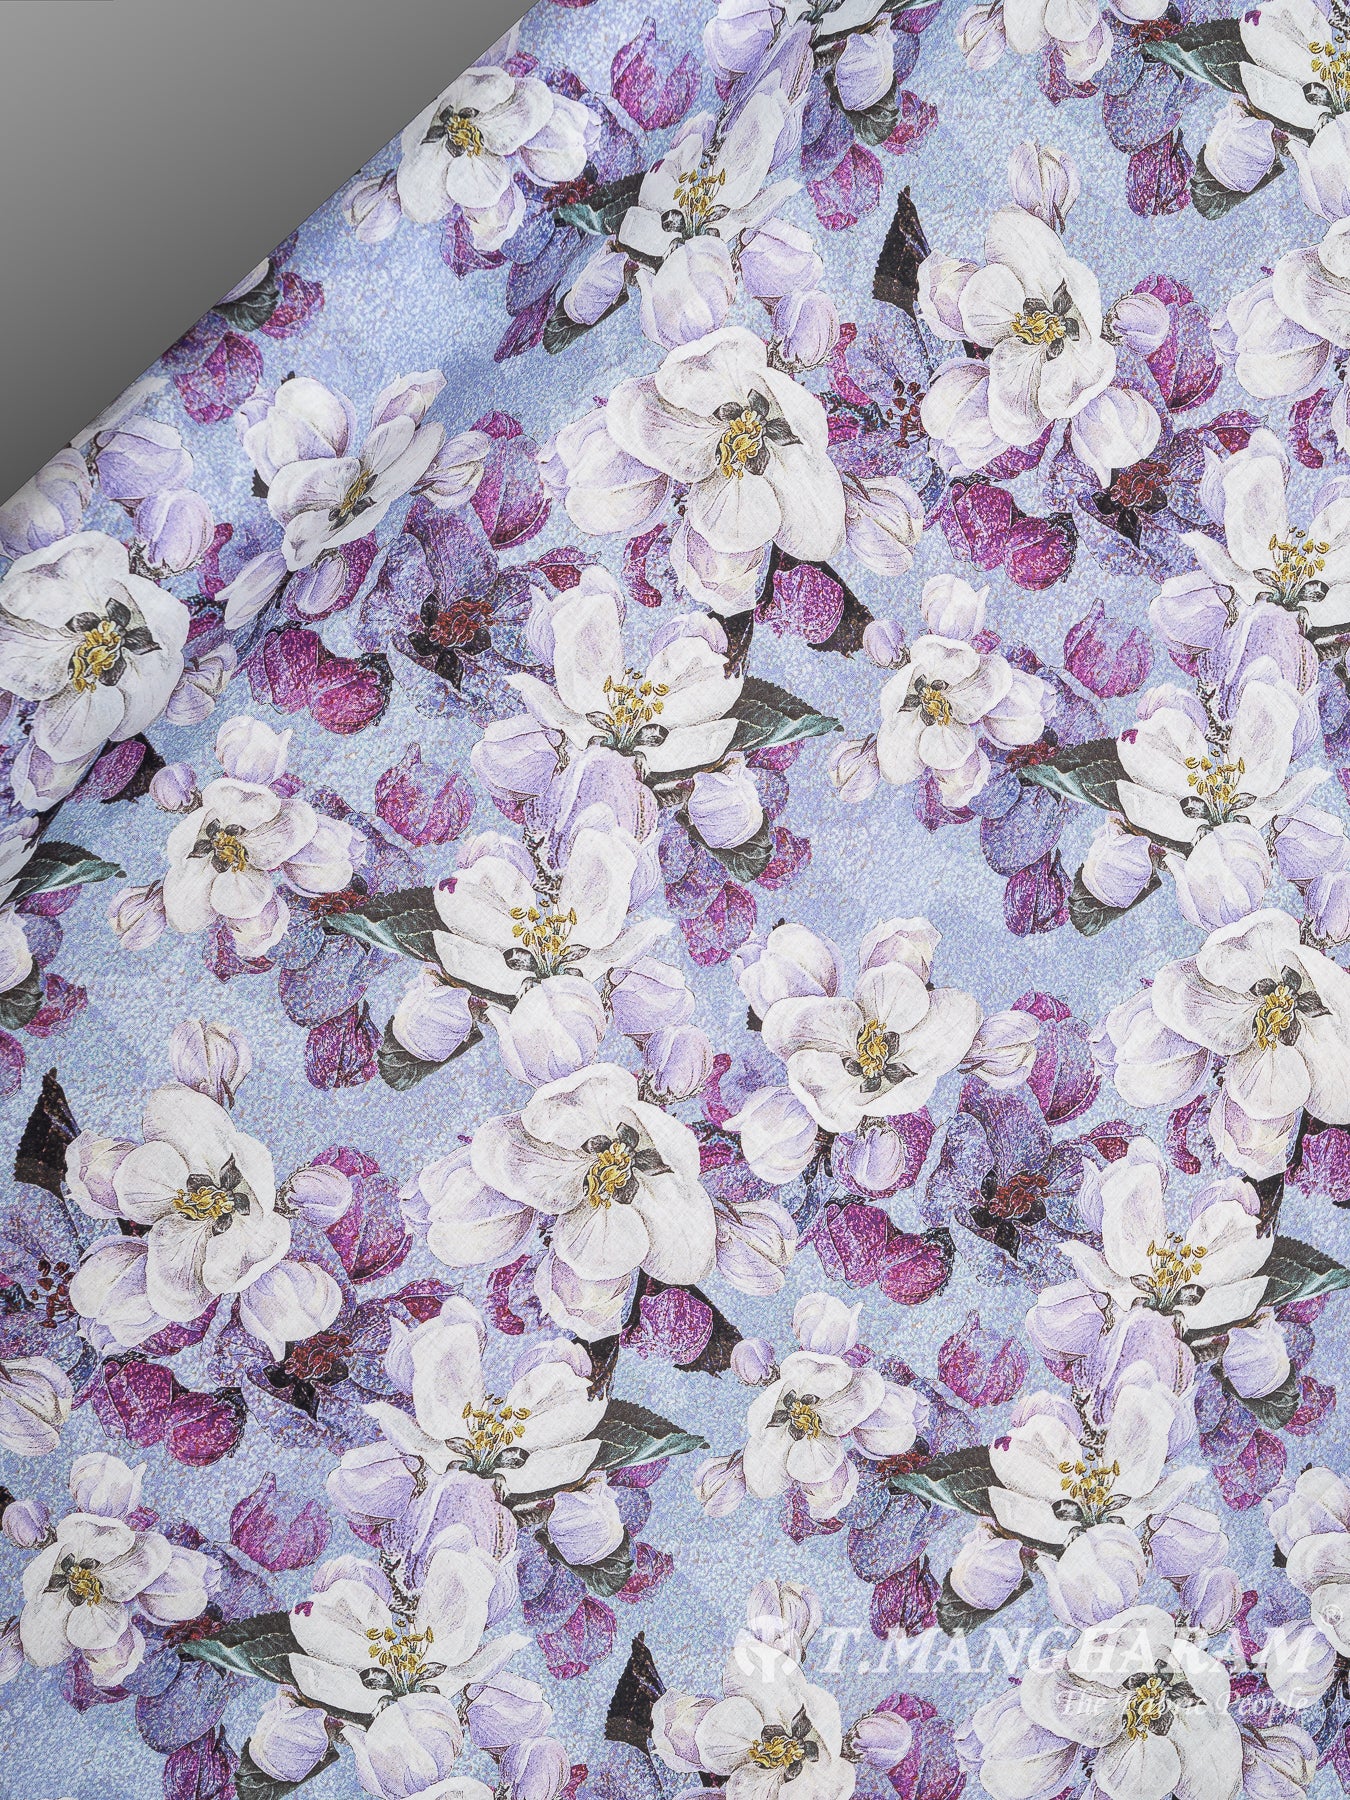 Violet Cotton Fabric - EB5890 view-2